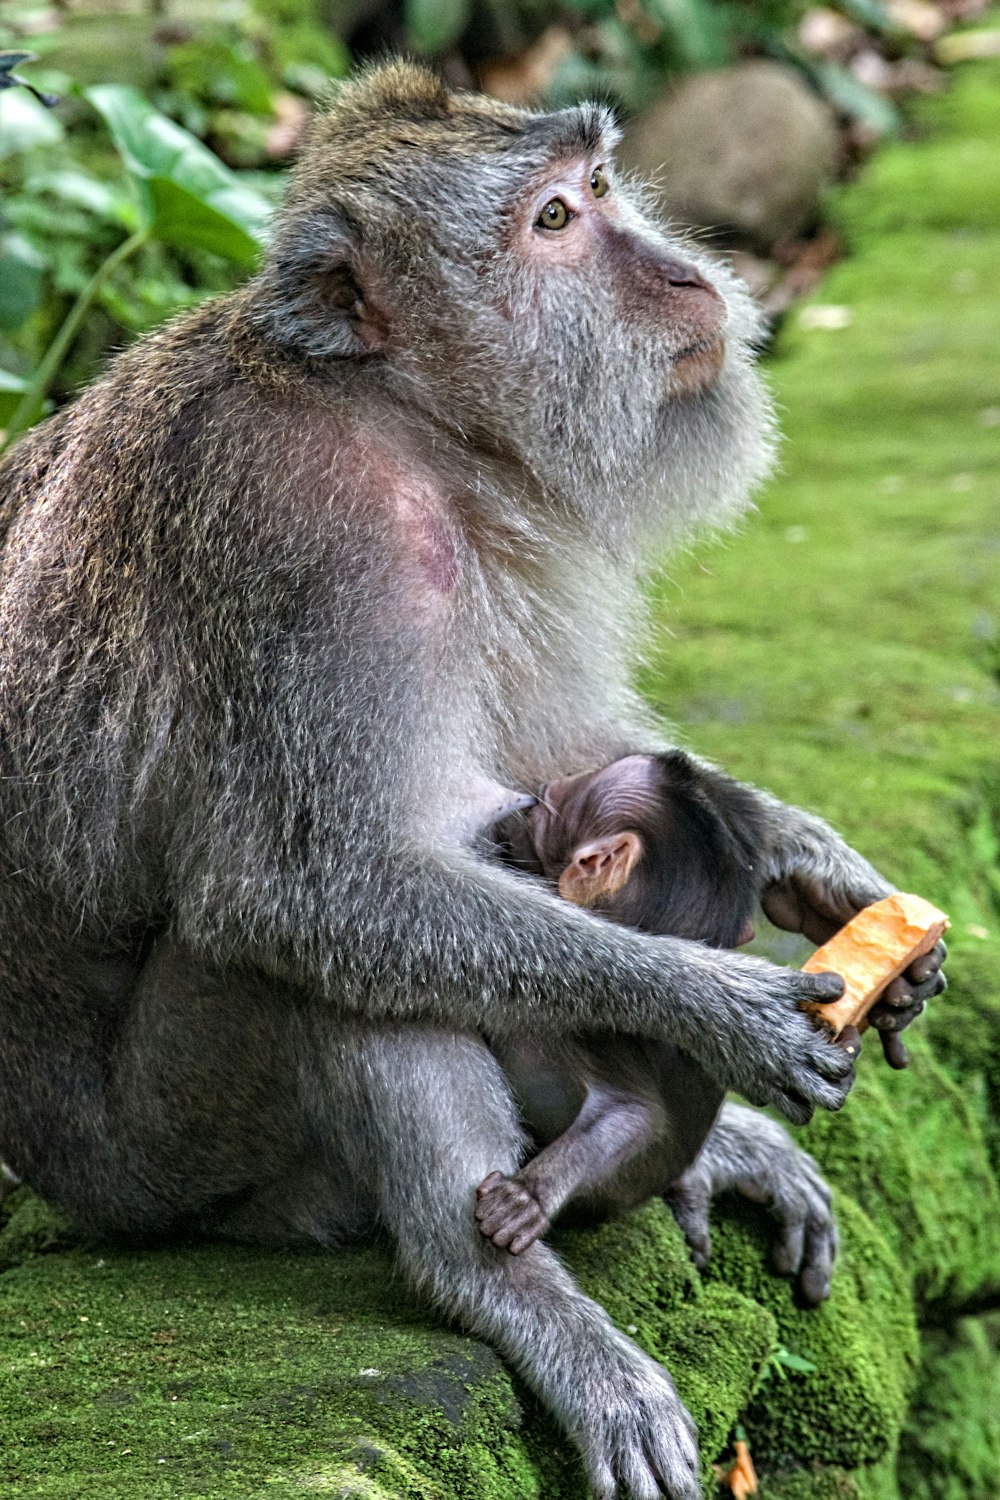 chimpanzee breastfeeding her young